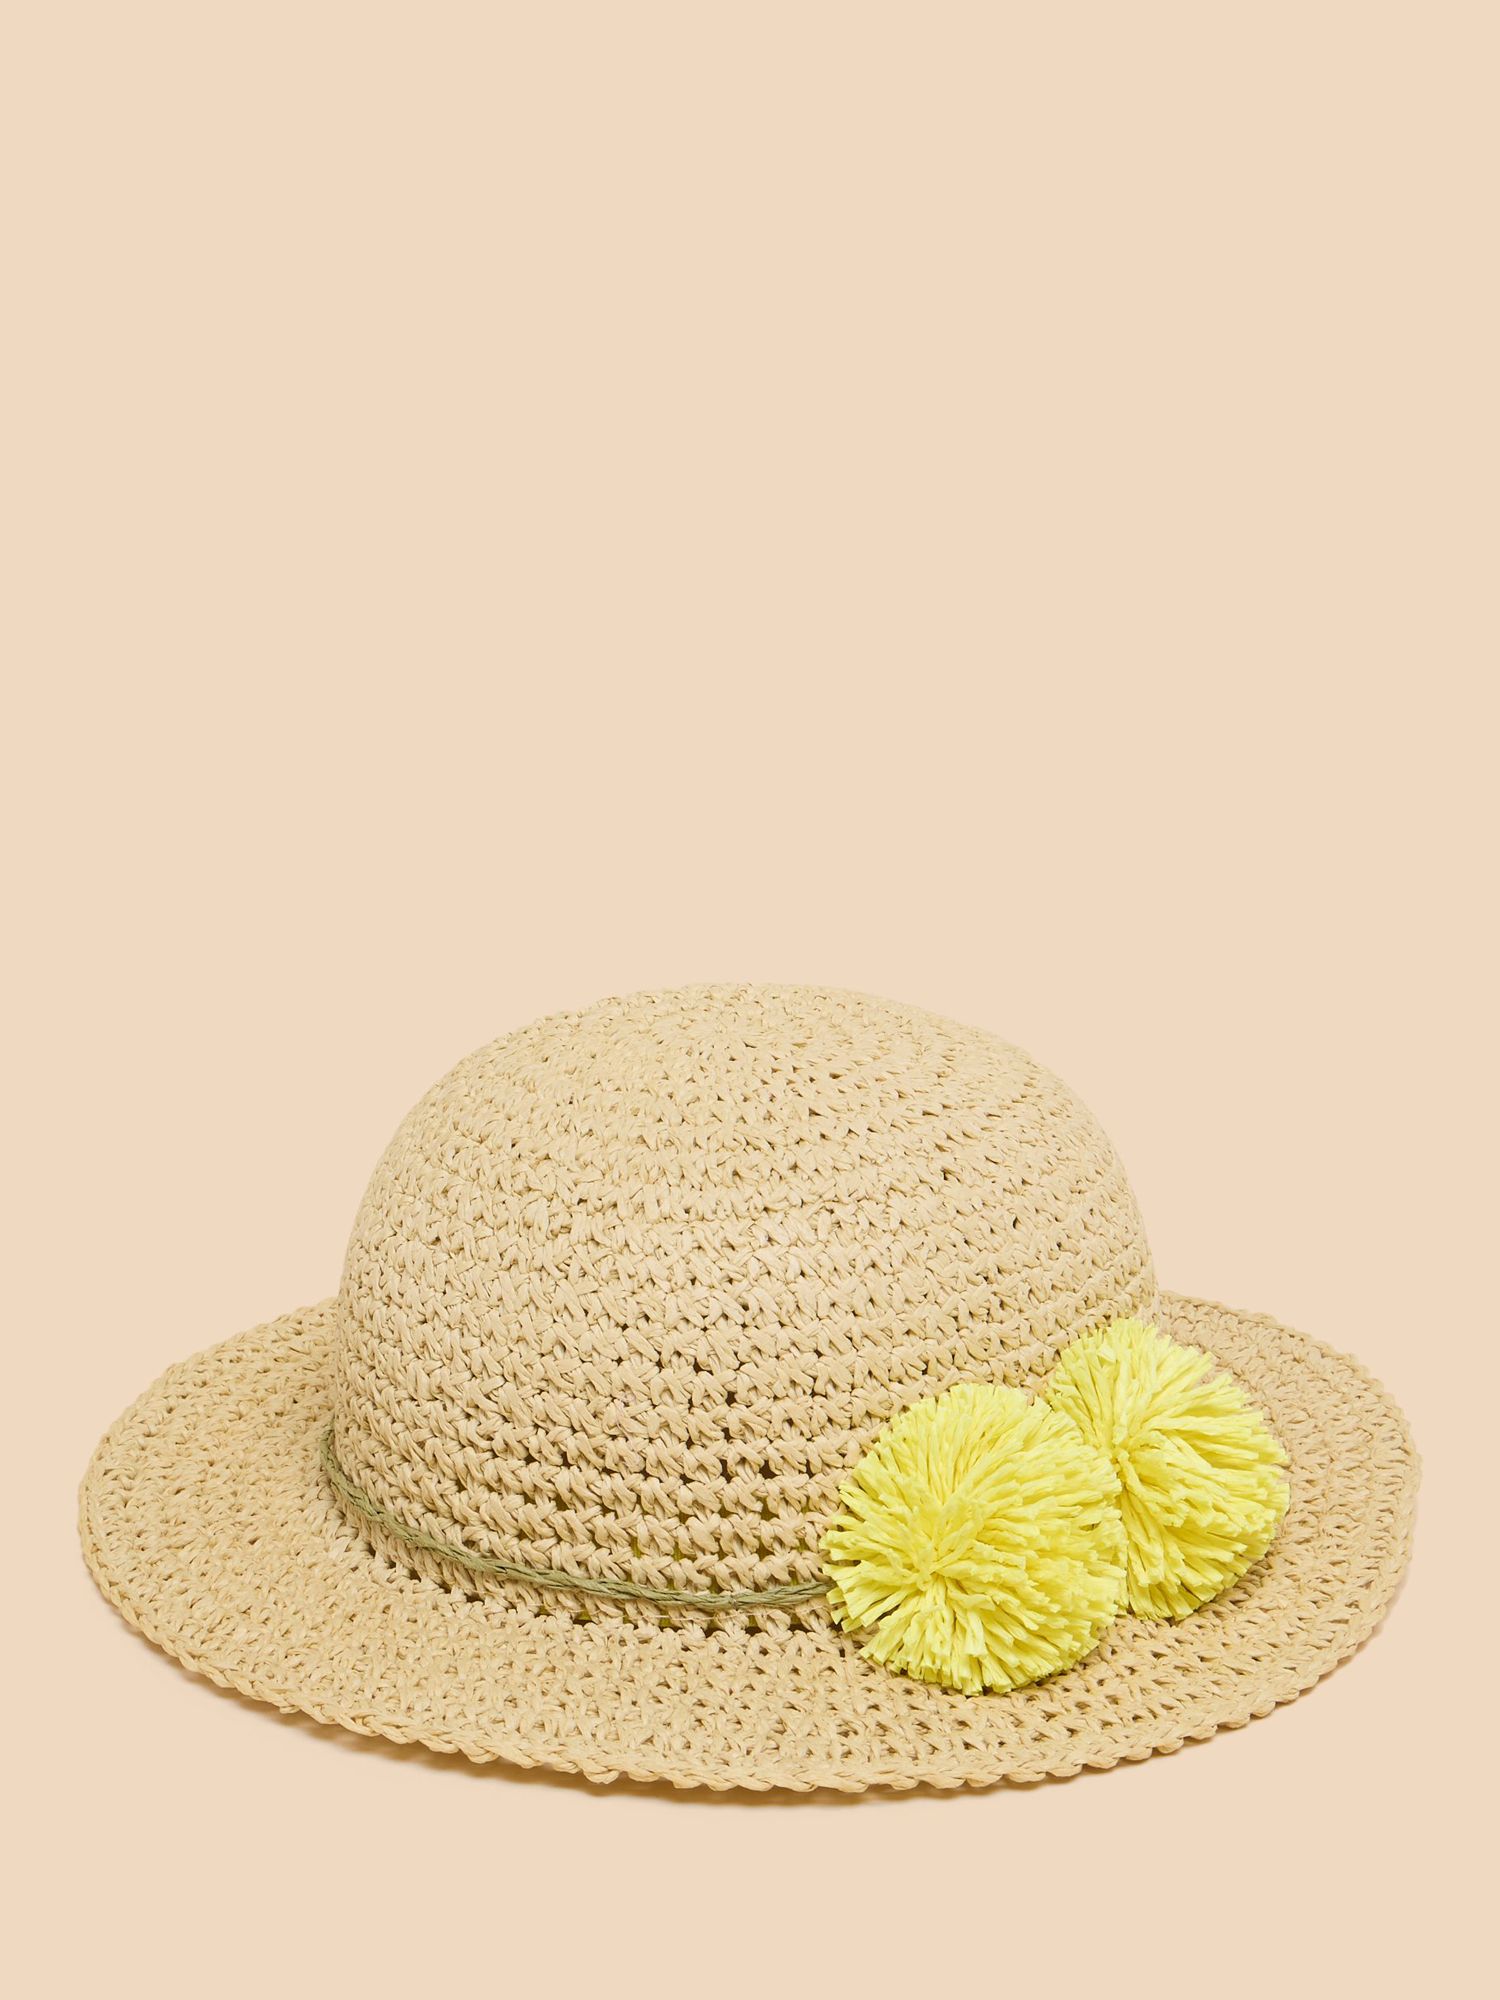 White Stuff Kids' Sun Hat, Natural/Yellow, S-M